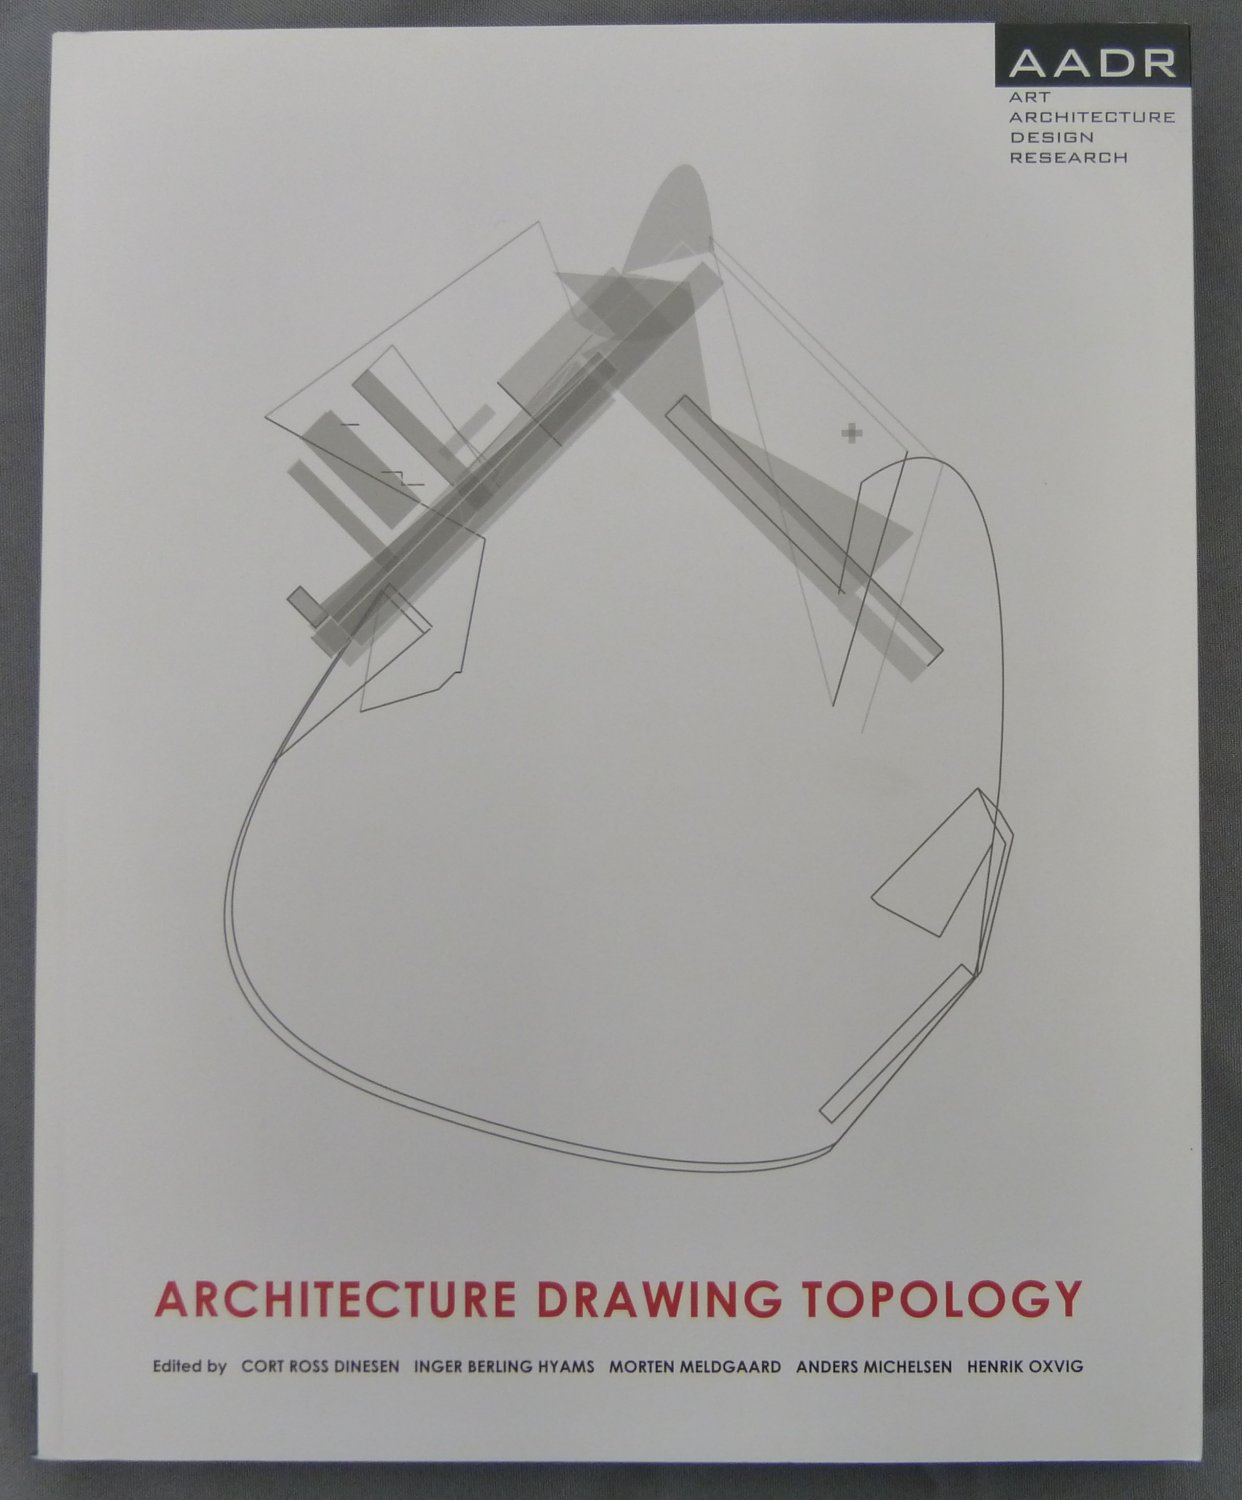 DINESEN, Cort Ross / Inger Berlin Hyams / Morten Meldgaard (Editors):  Architecture Drawing Topology. 